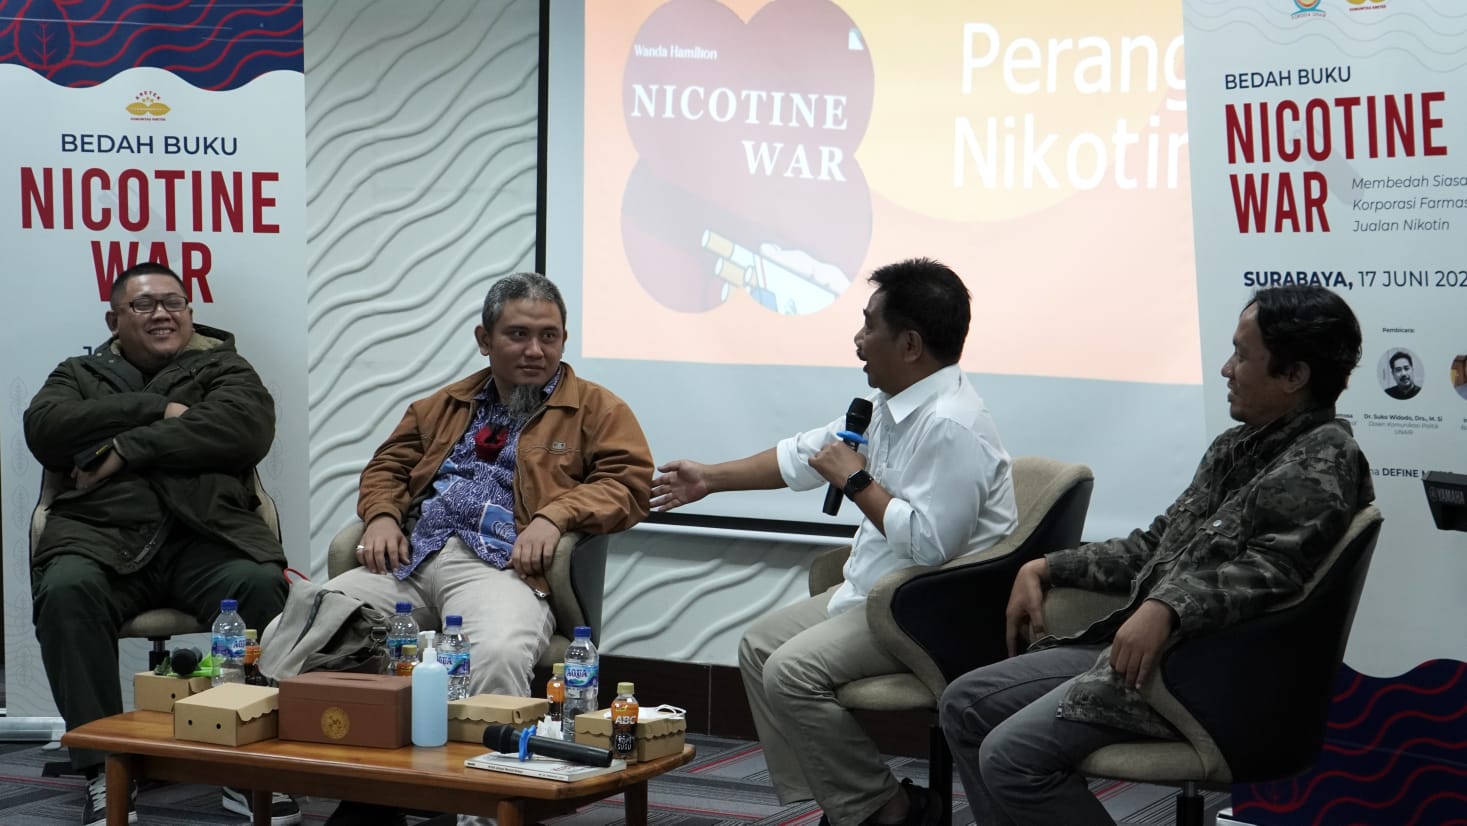 Nicotine War Goes to Unair; Membedah Siasat Korporasi Farmasi Jualan Nikotin